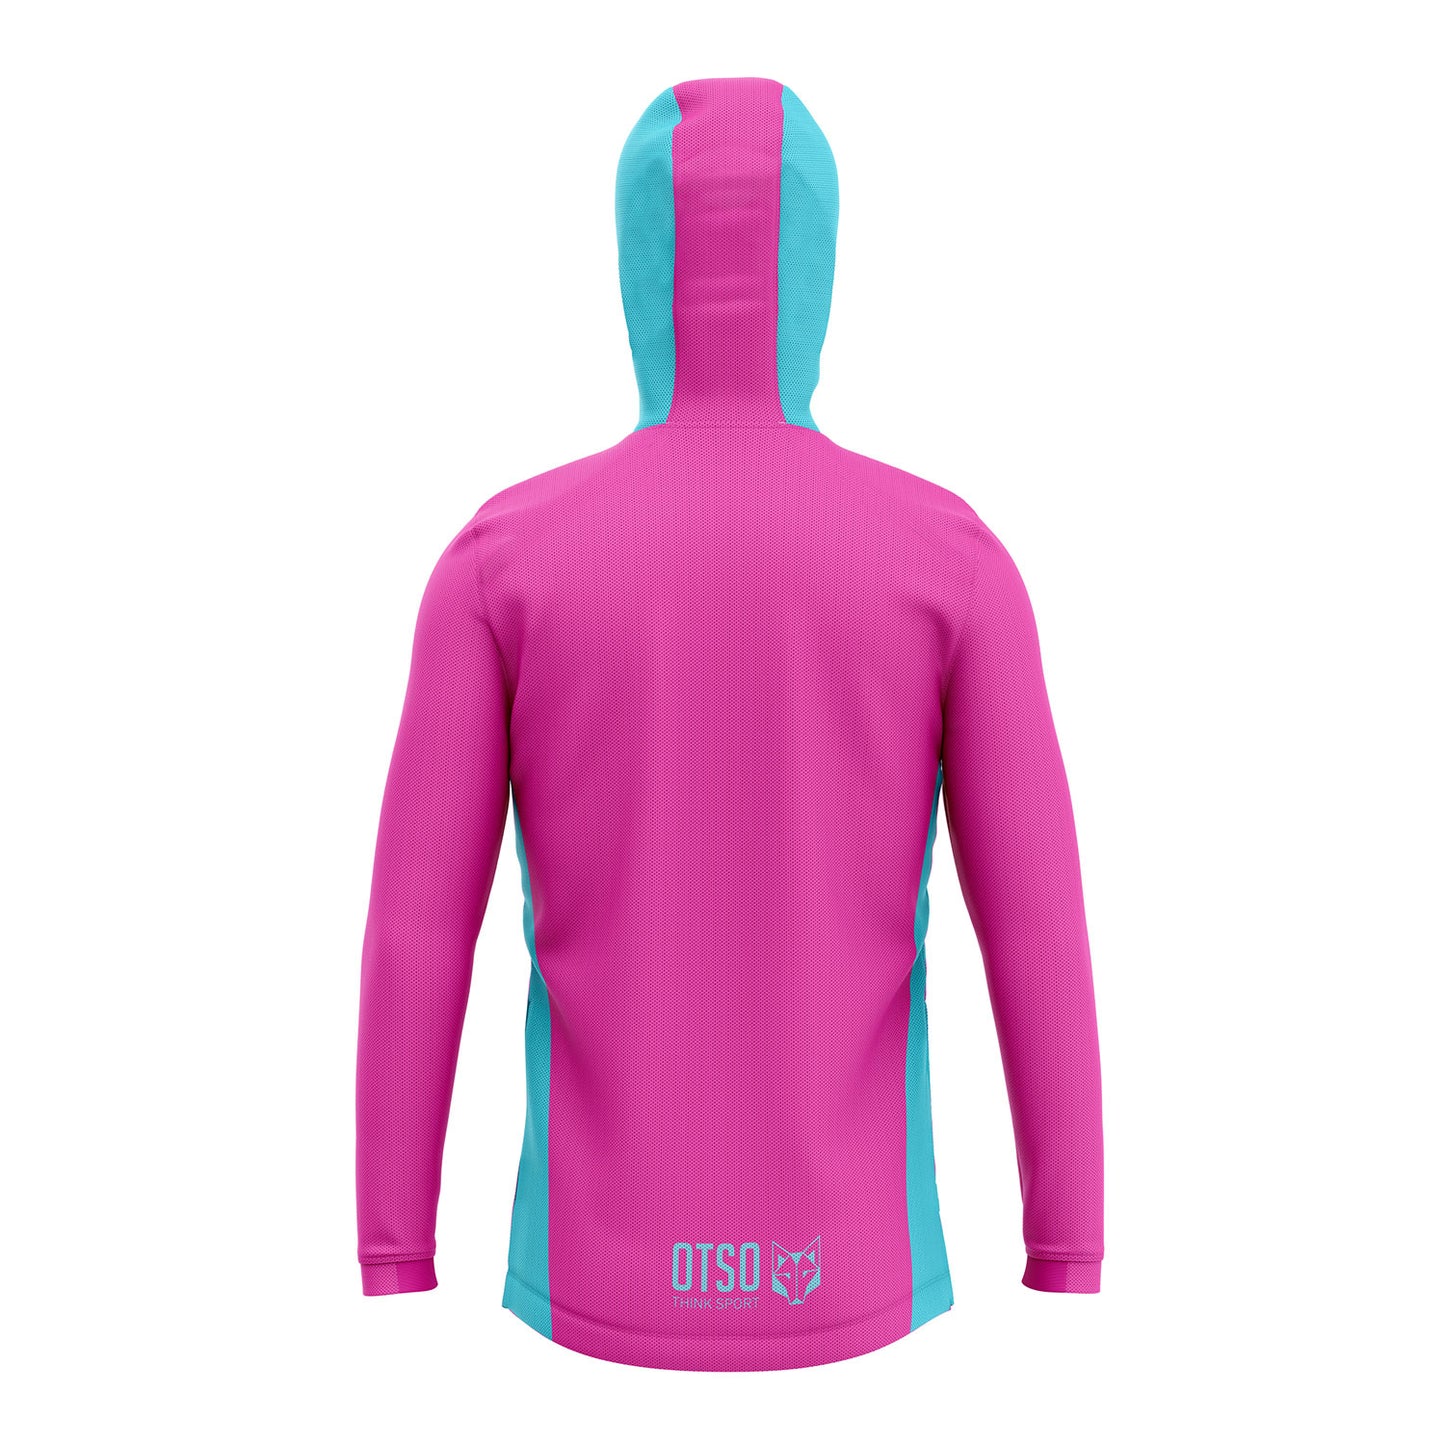 Unisex sport hoodie - Fluo Pink & Light Blue